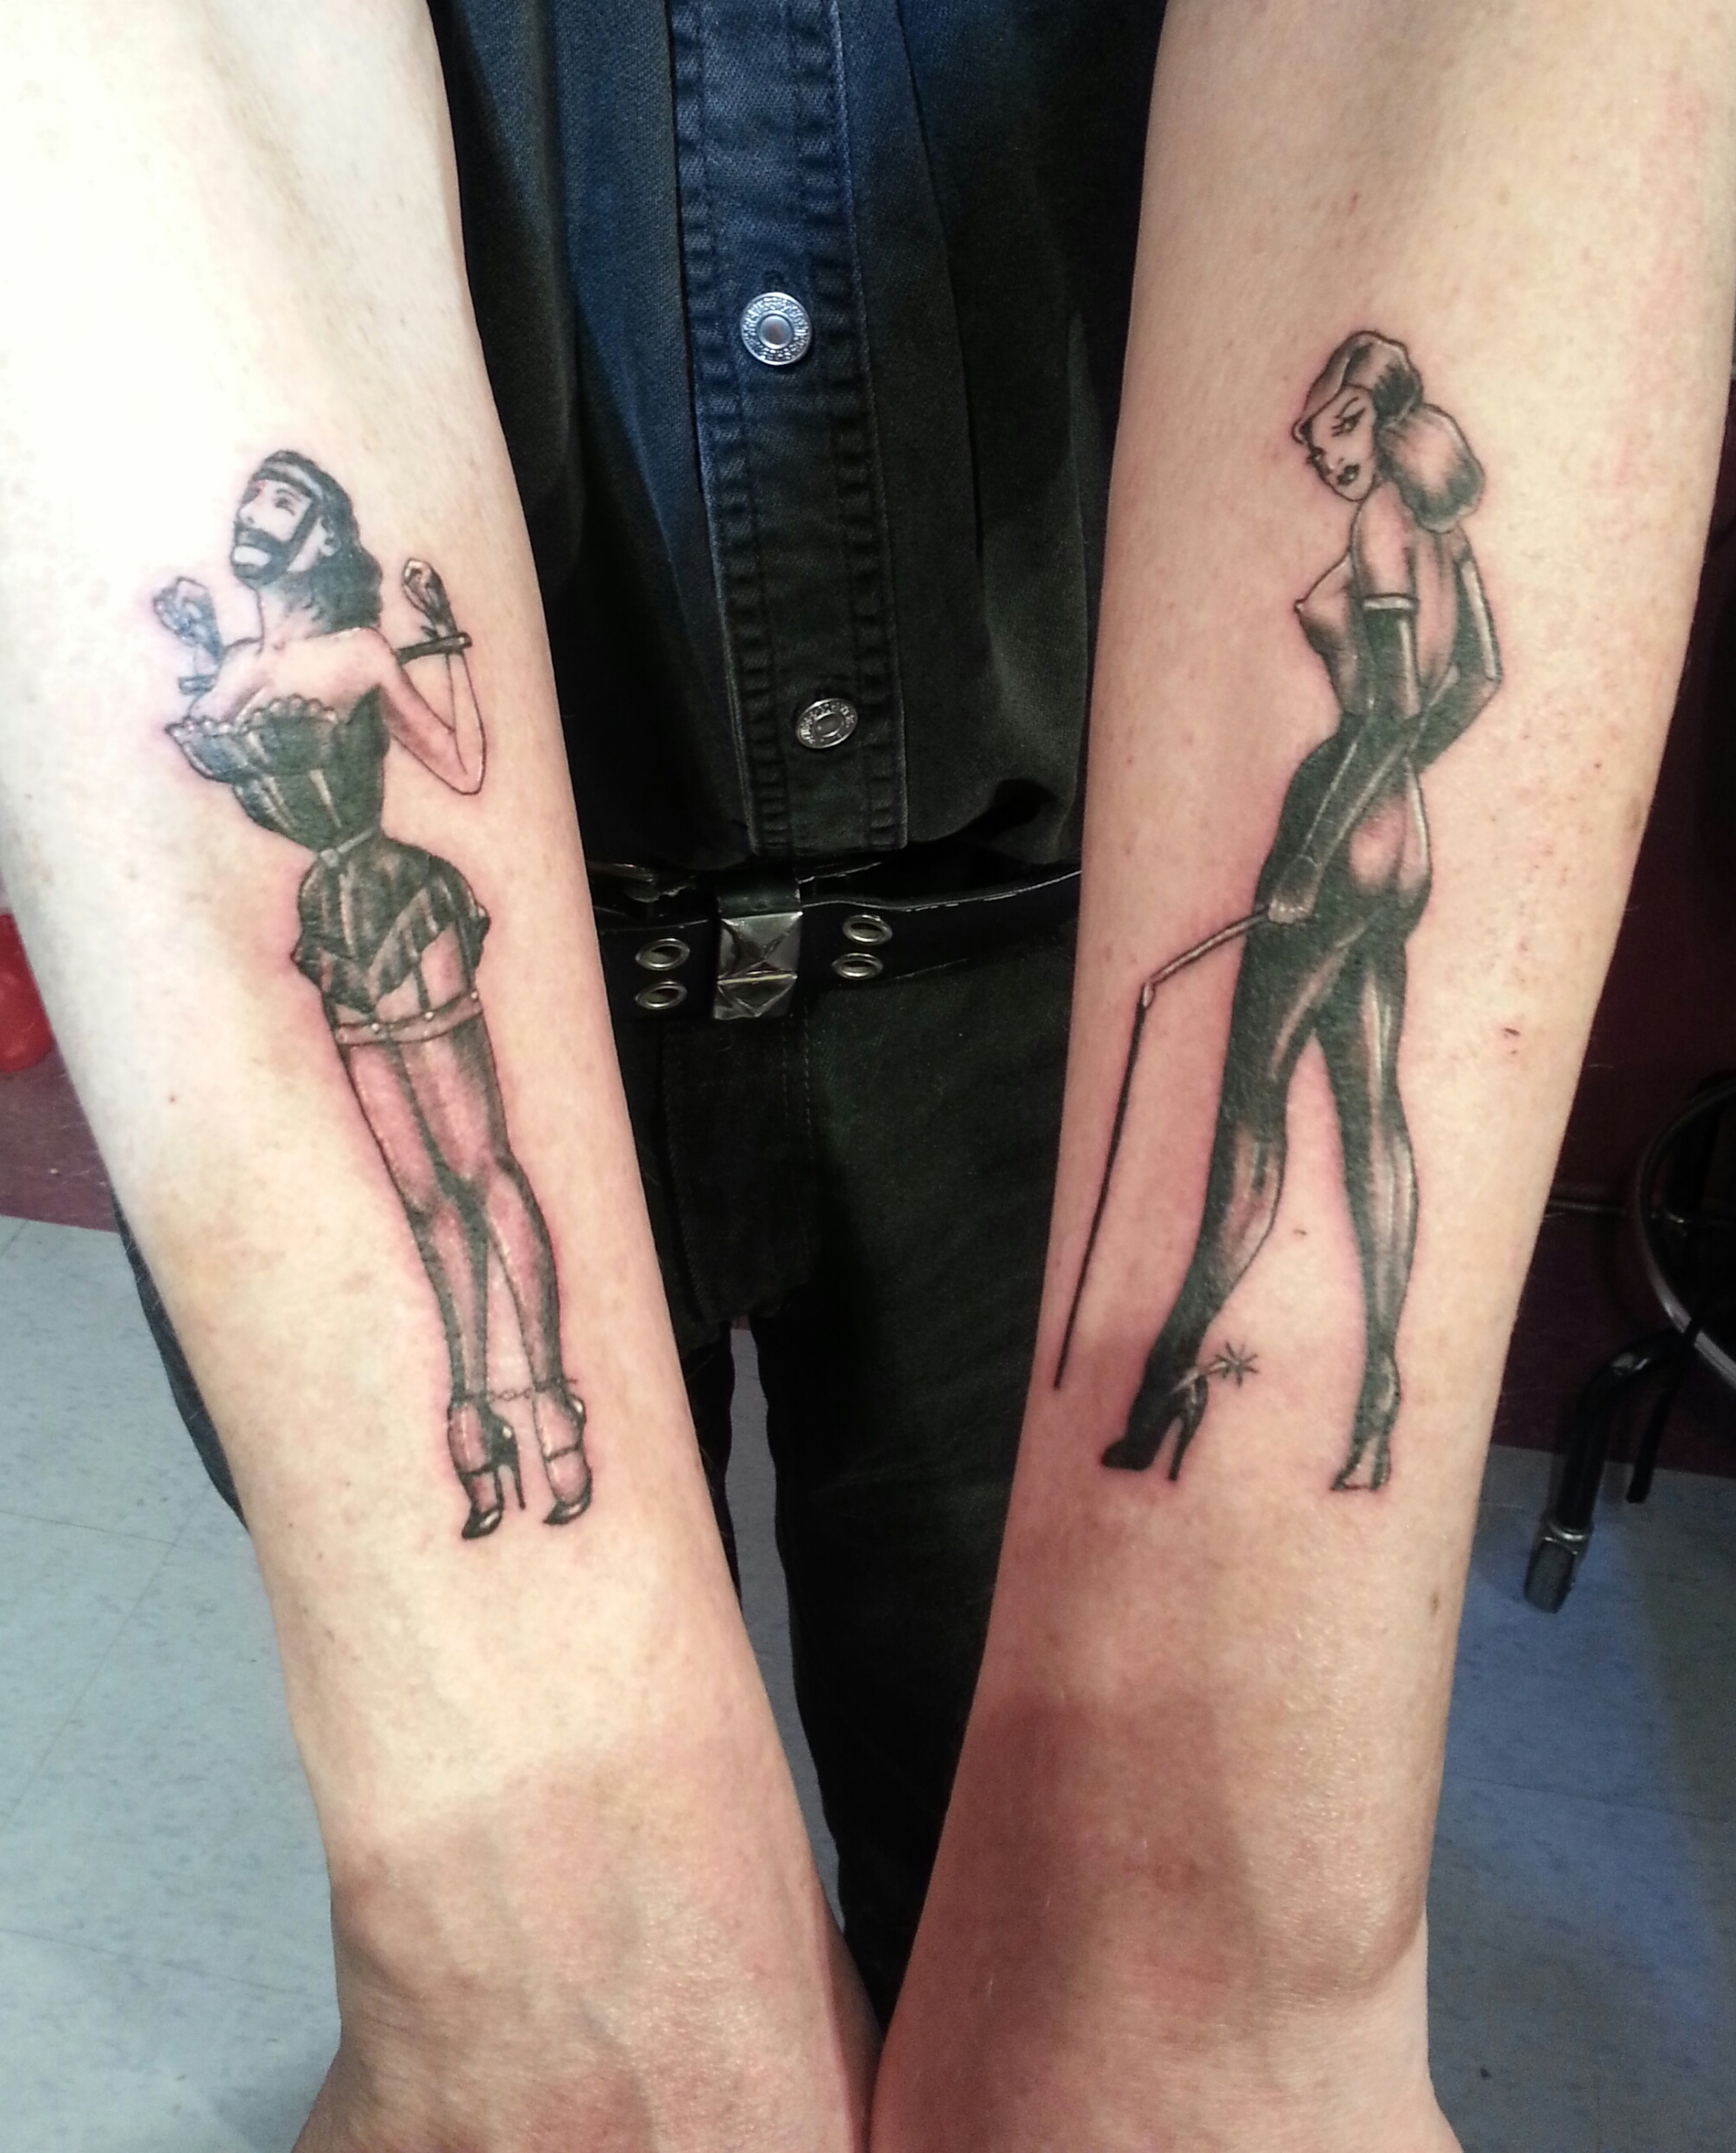 Chest Tattoos for Women - Chest Tattoo Designs Ideas For Women, Girls Odpot...